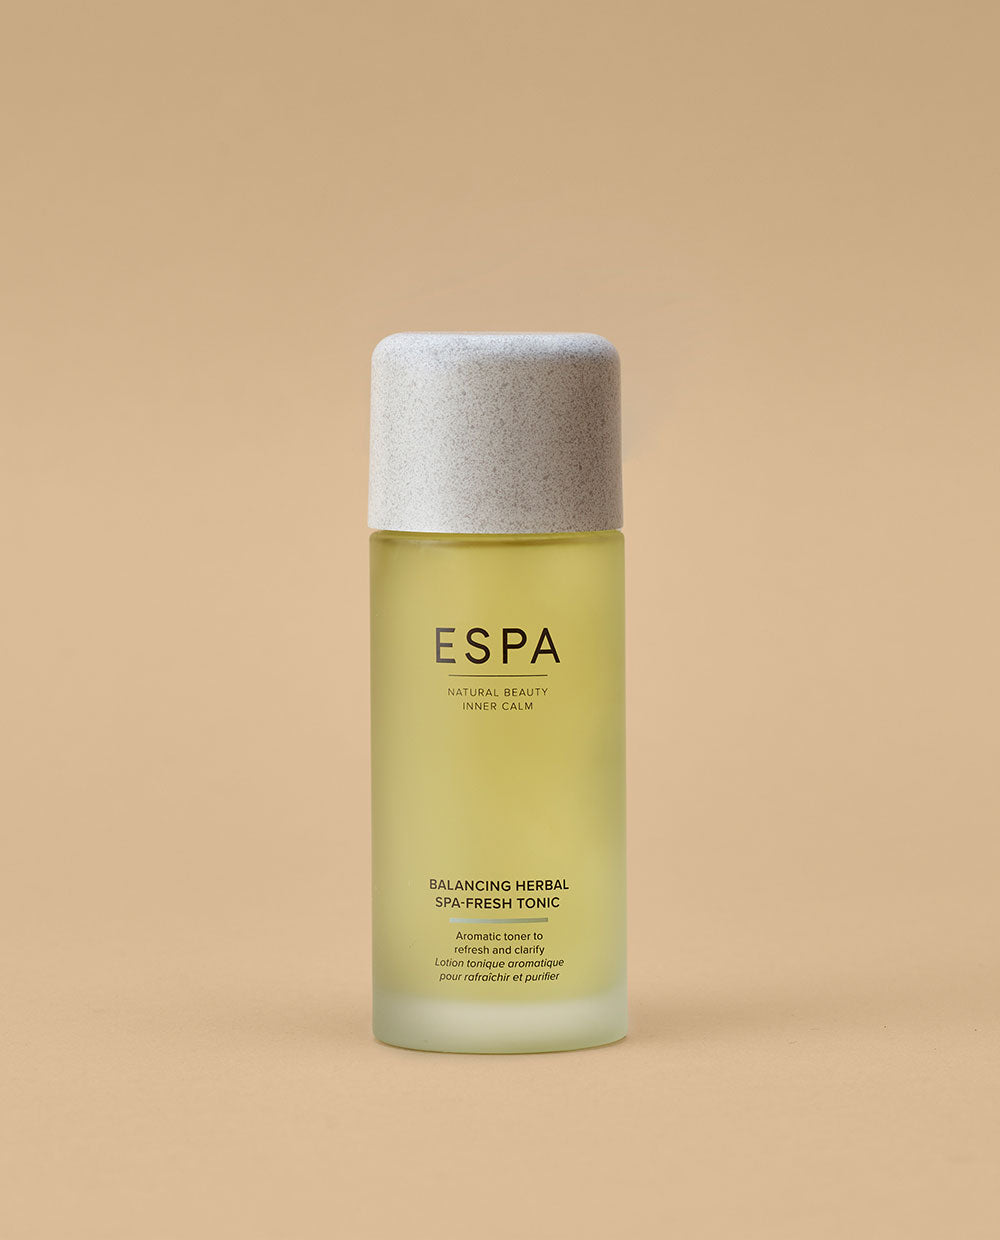 ESPA Balancing Herbal Spa Fresh Tonic - SenSpa